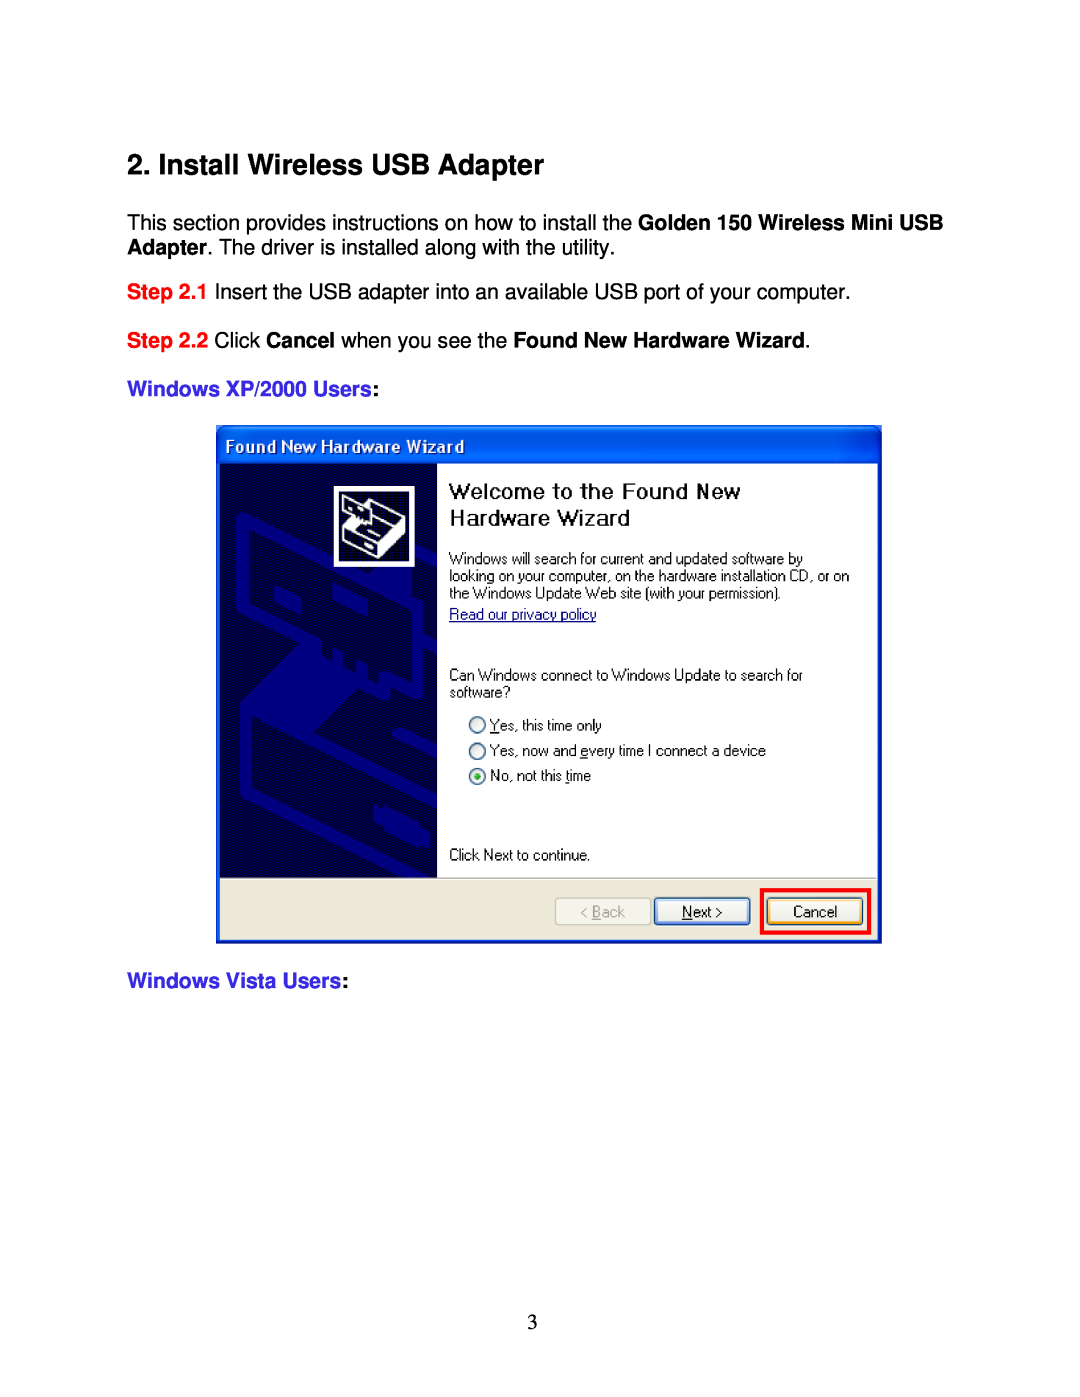 Airlink101 AWLL5077 user manual Install Wireless USB Adapter, Windows XP/2000 Users Windows Vista Users 